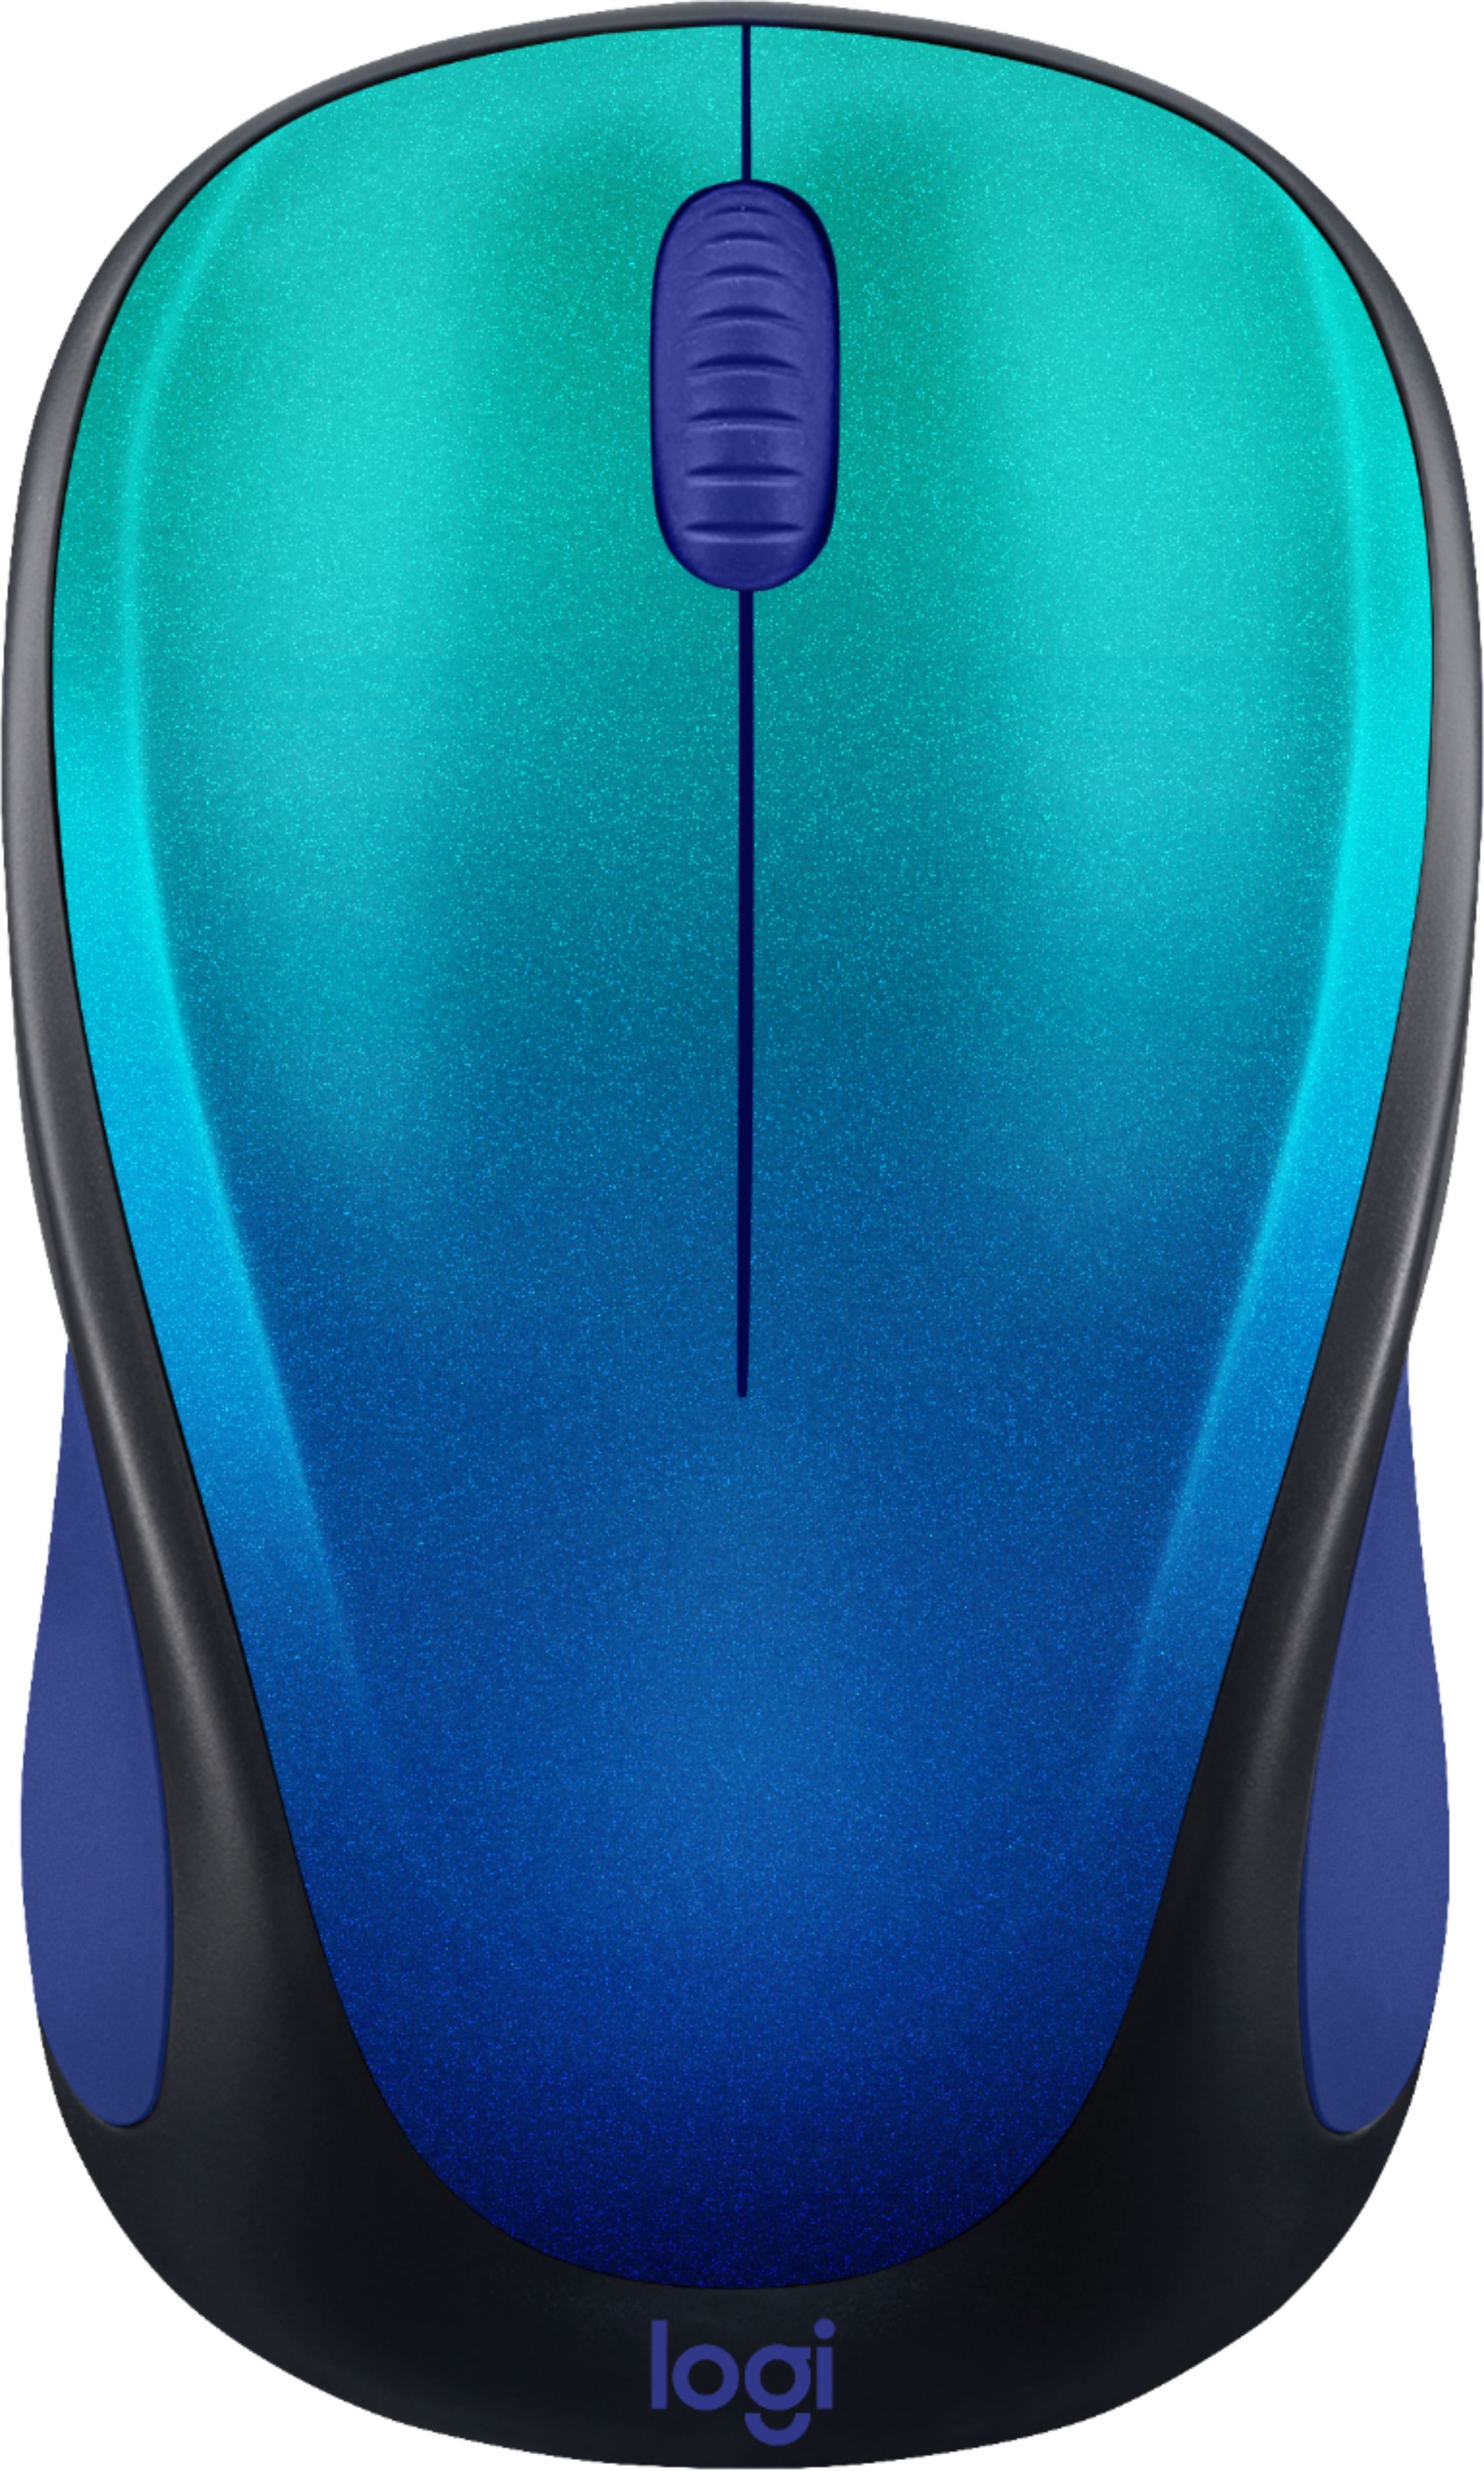 lenovo wireless mouse - Best Buy